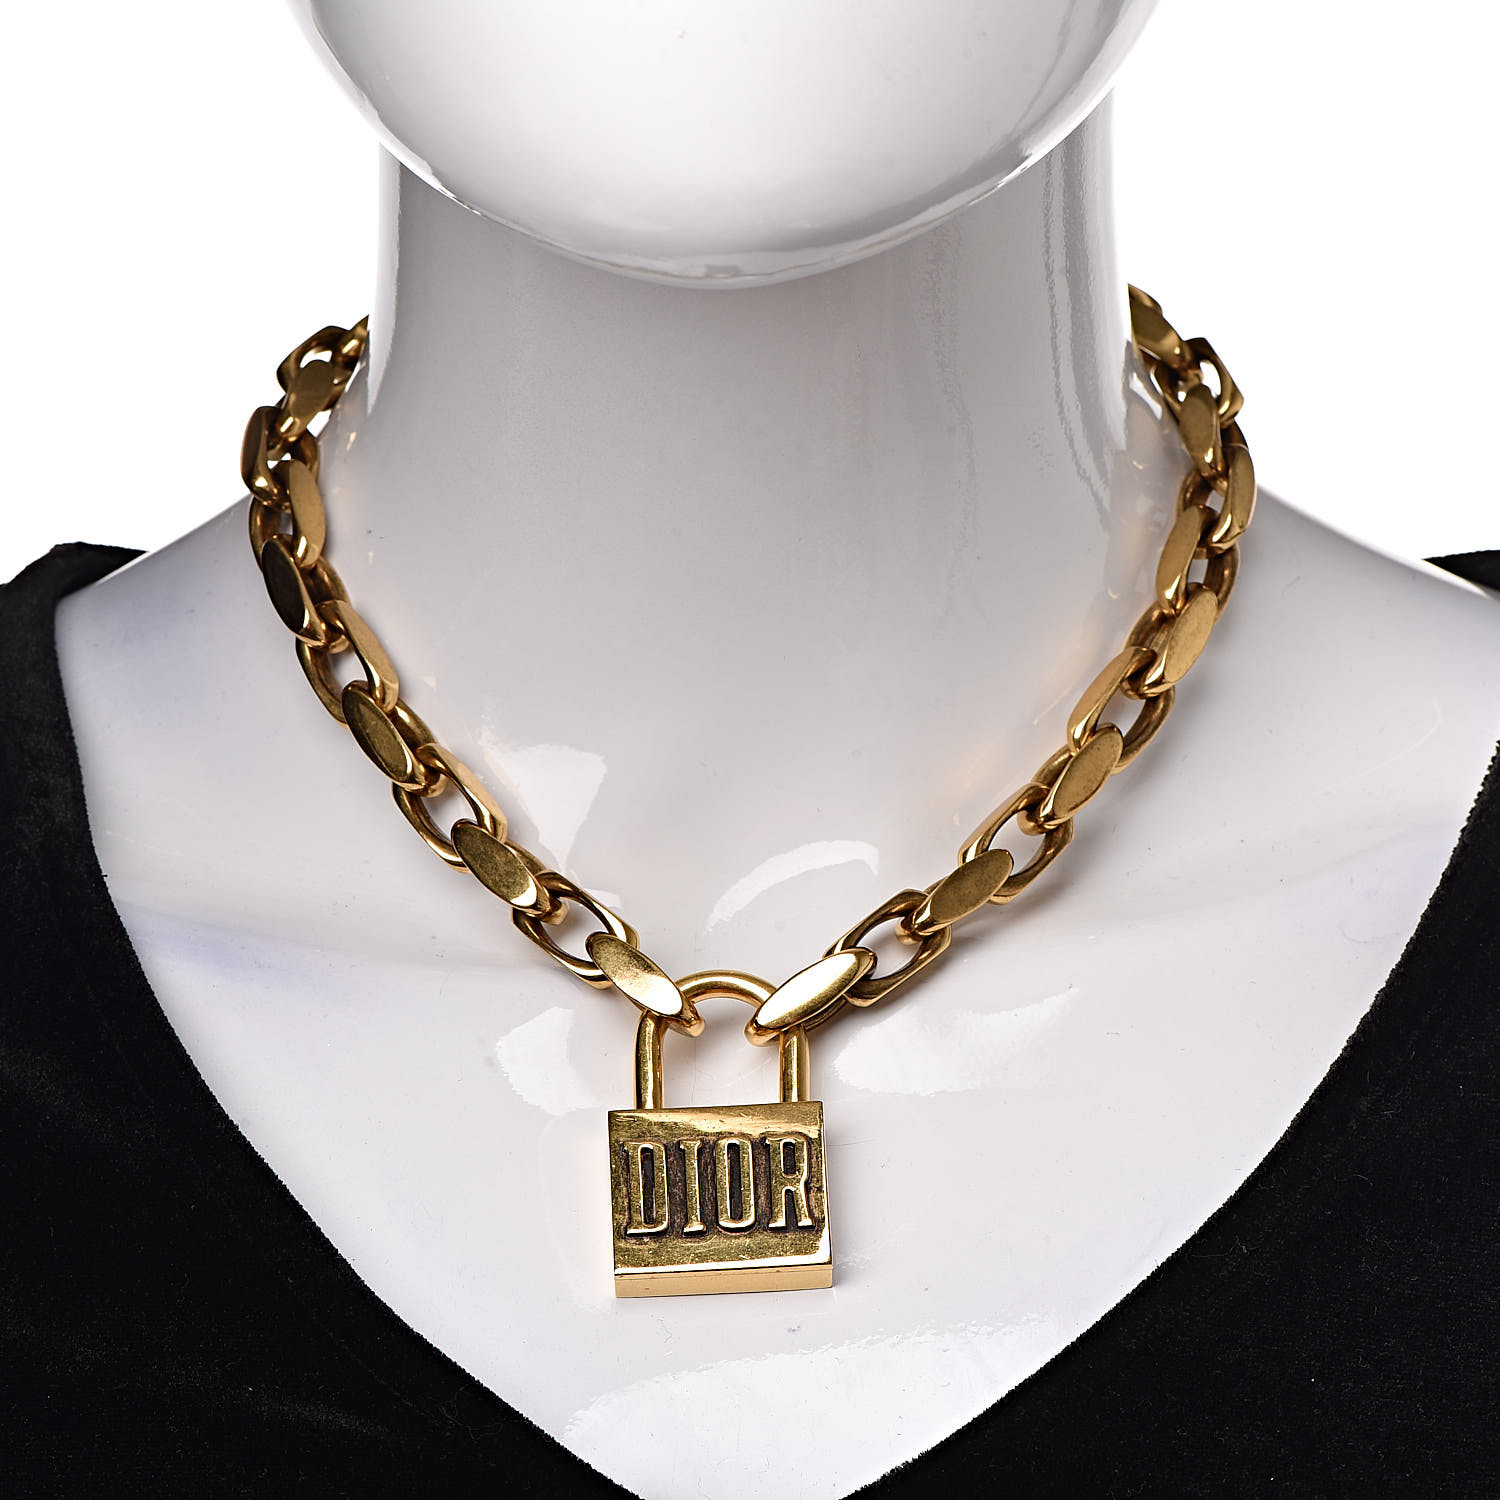 padlock necklace dior, OFF 77%,Buy!